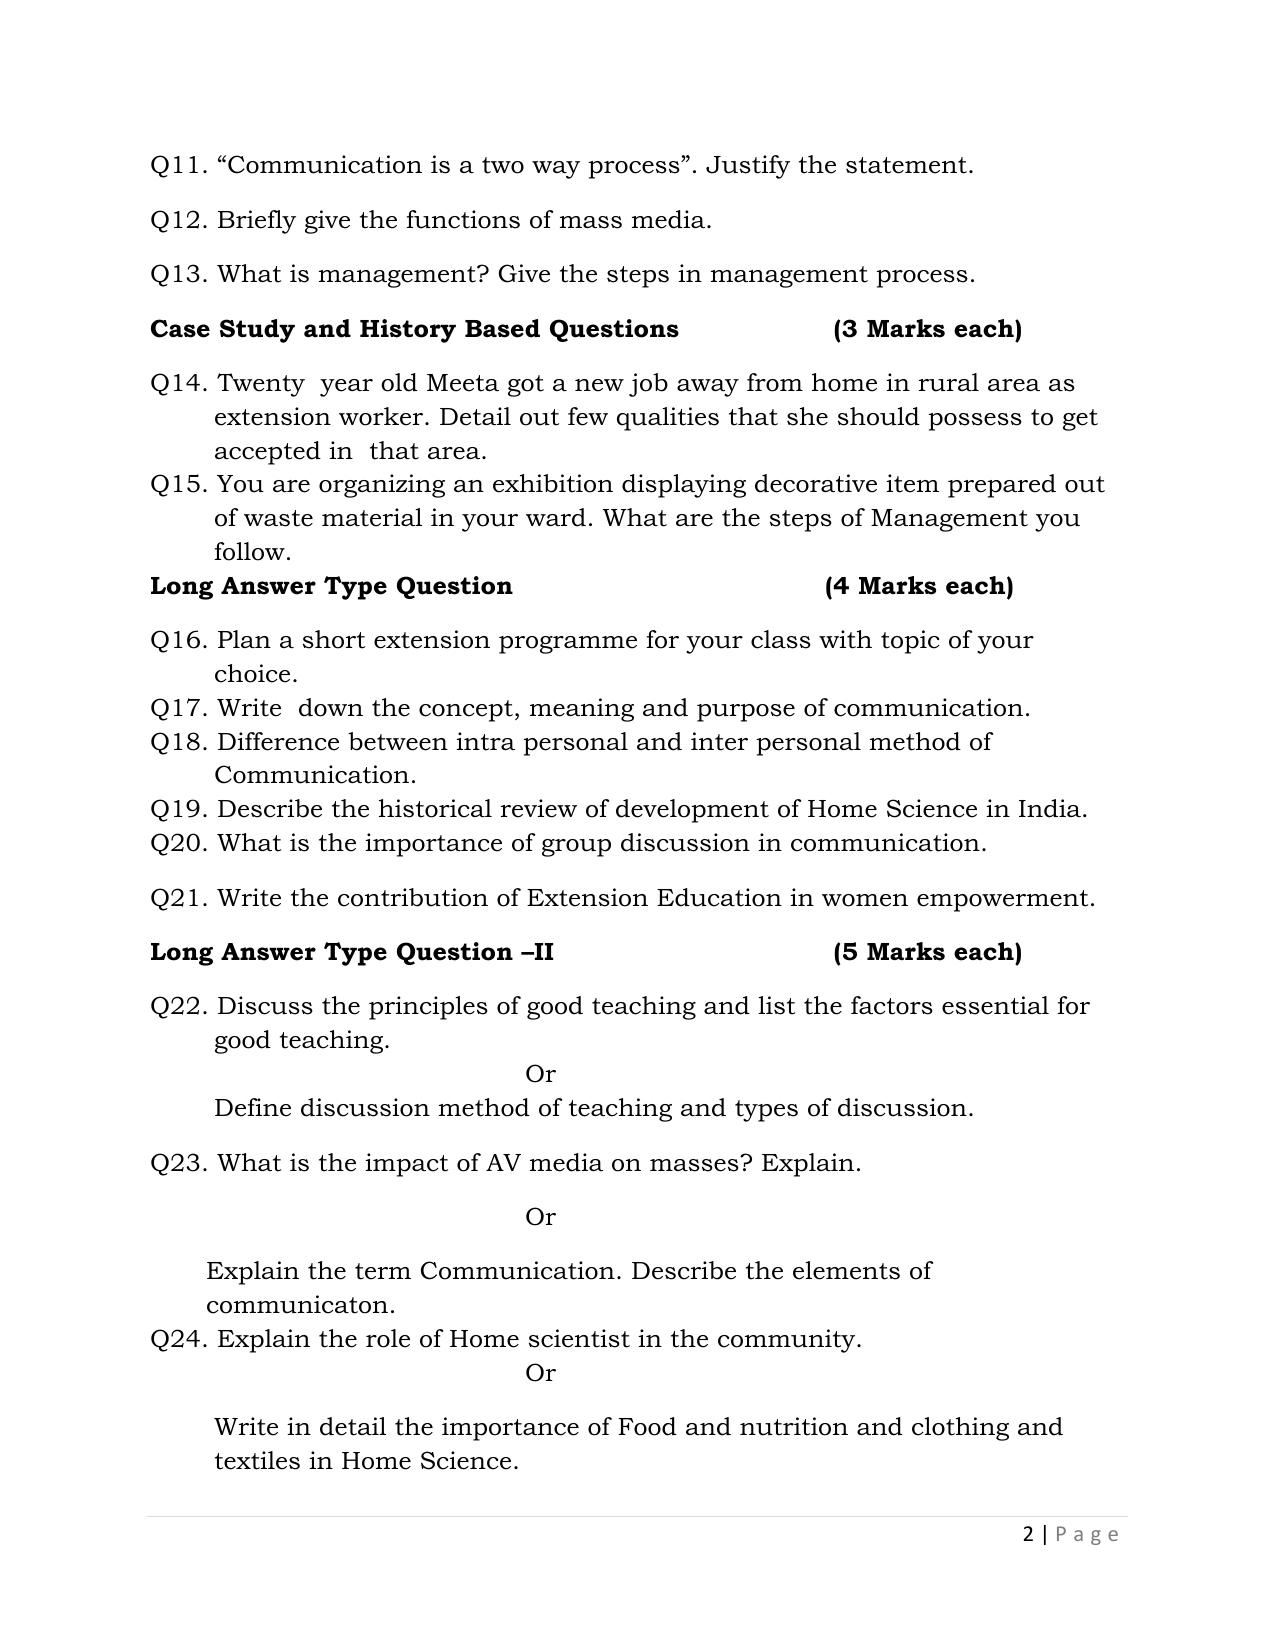 JKBOSE Class 12 Extension Education Model Question Paper - Page 2